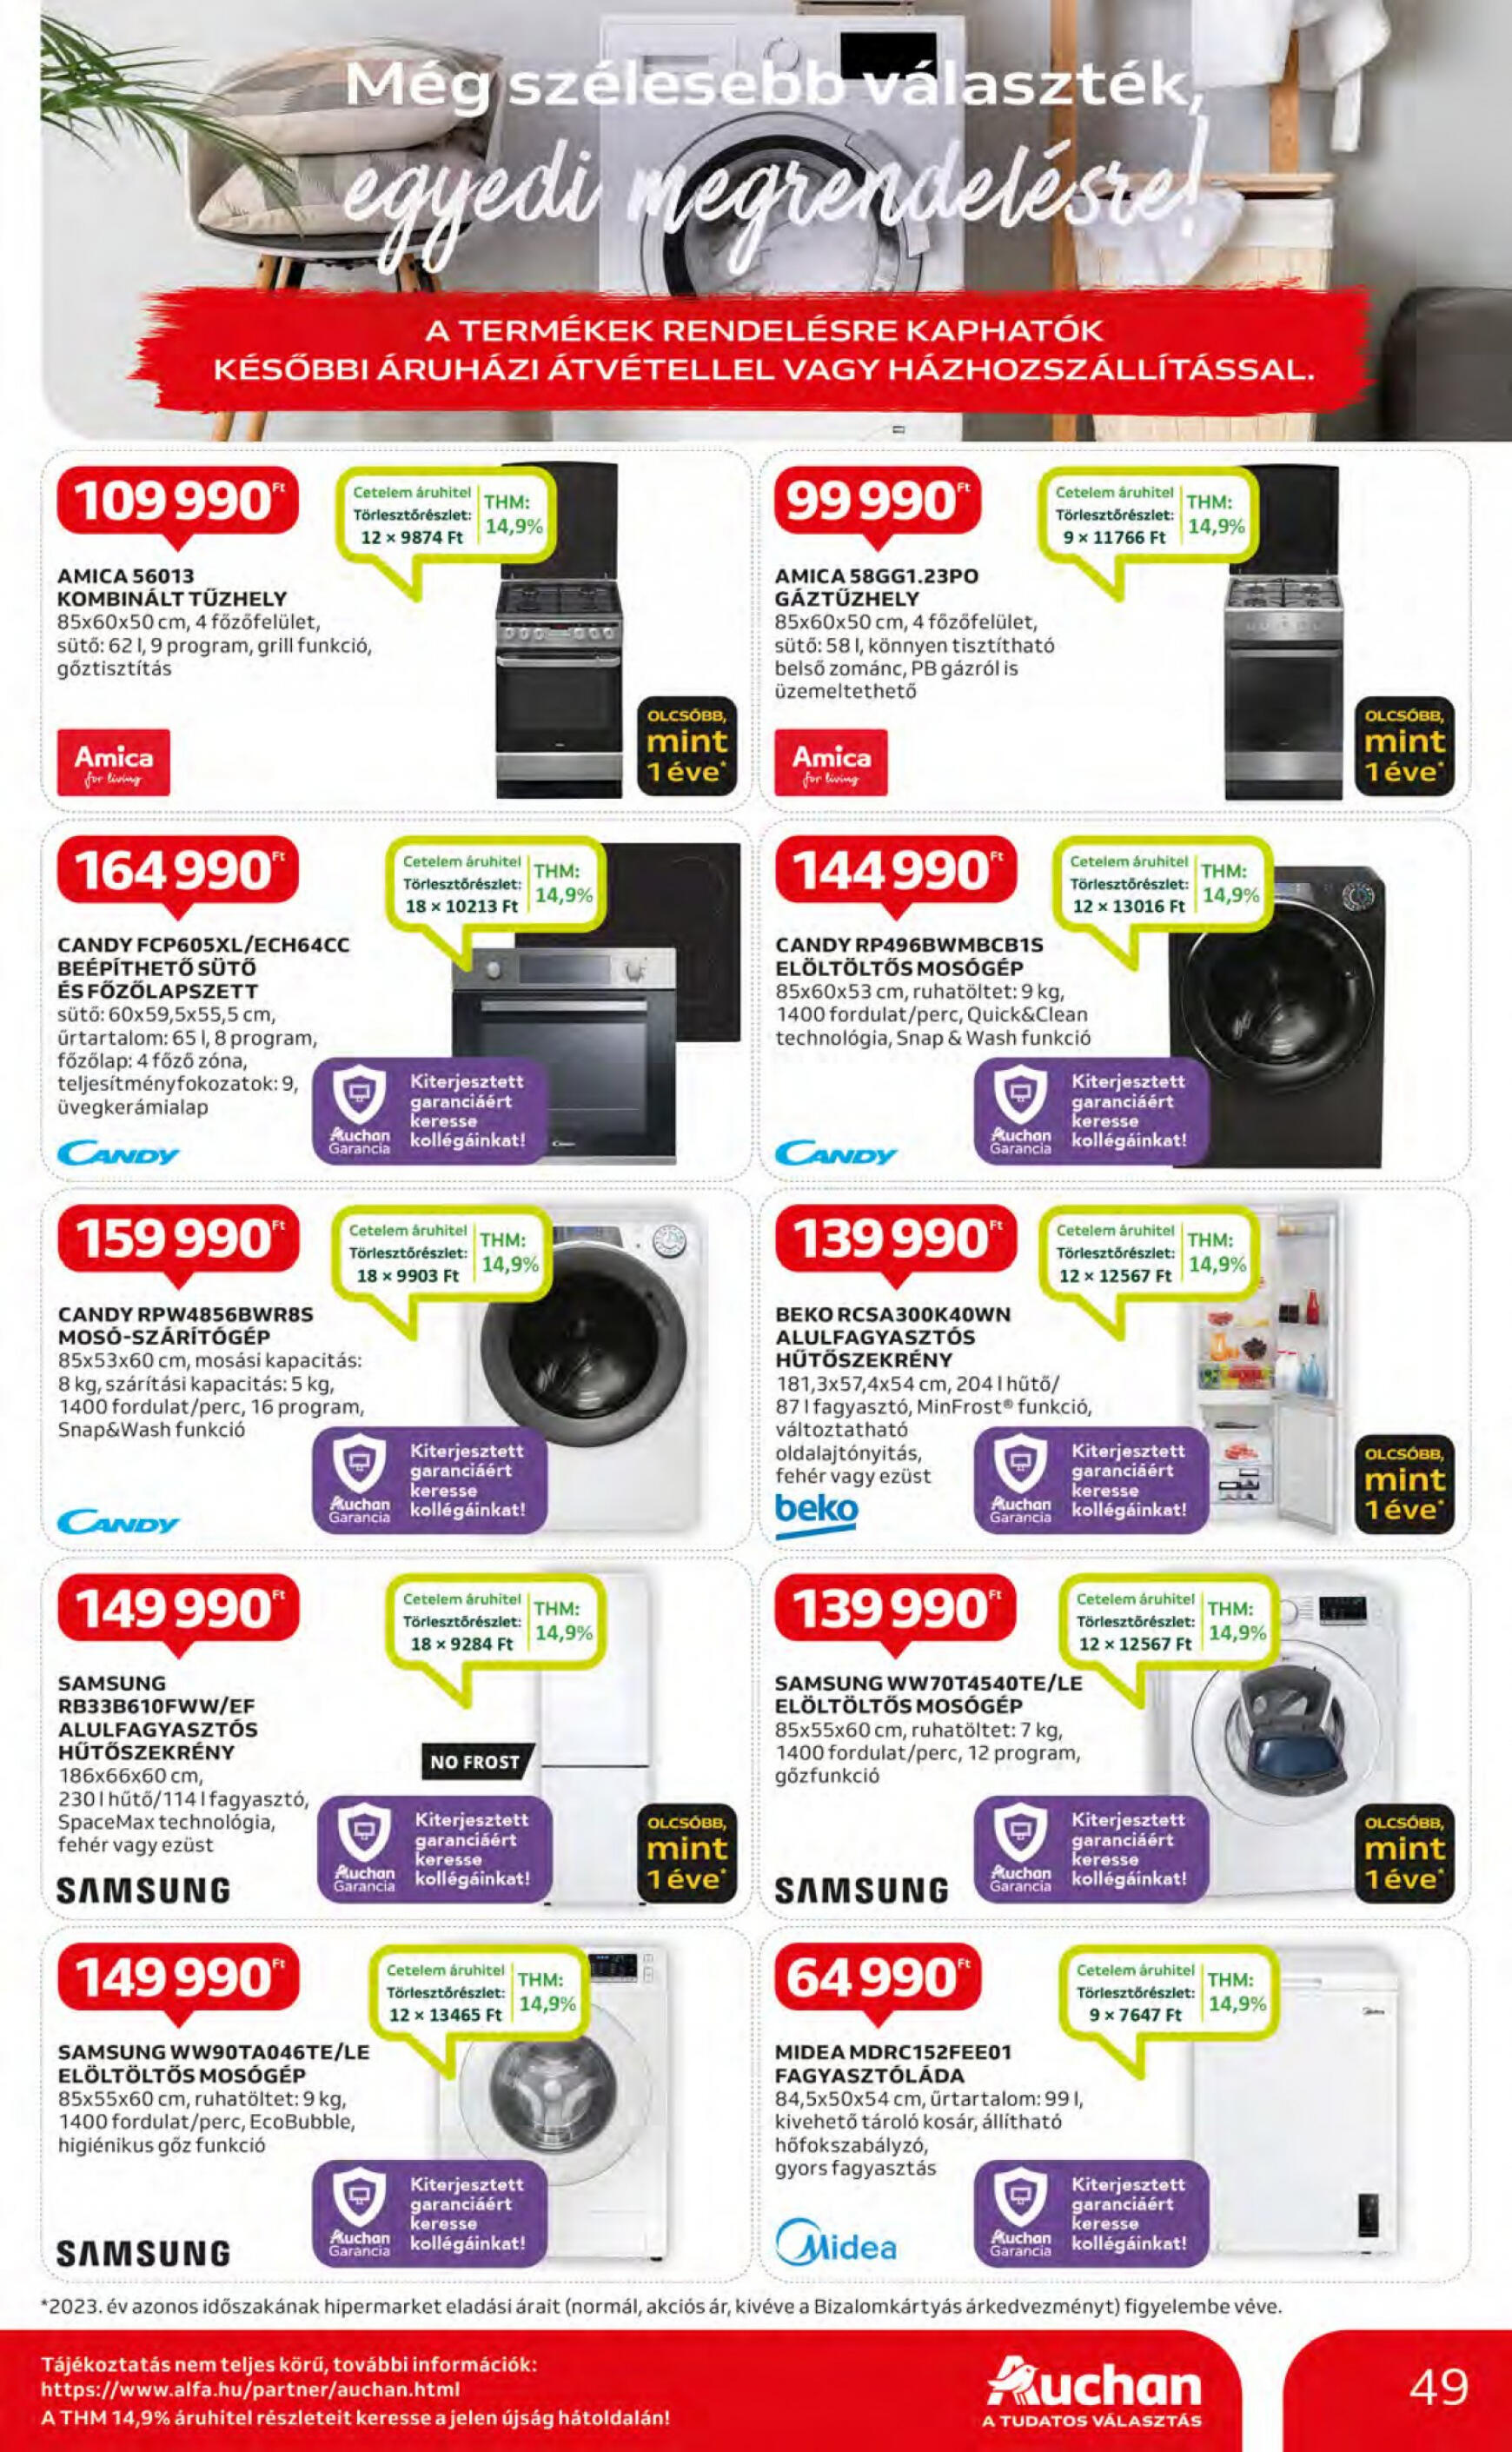 auchan - Aktuális újság Auchan 05.09. - 05.15. - page: 49